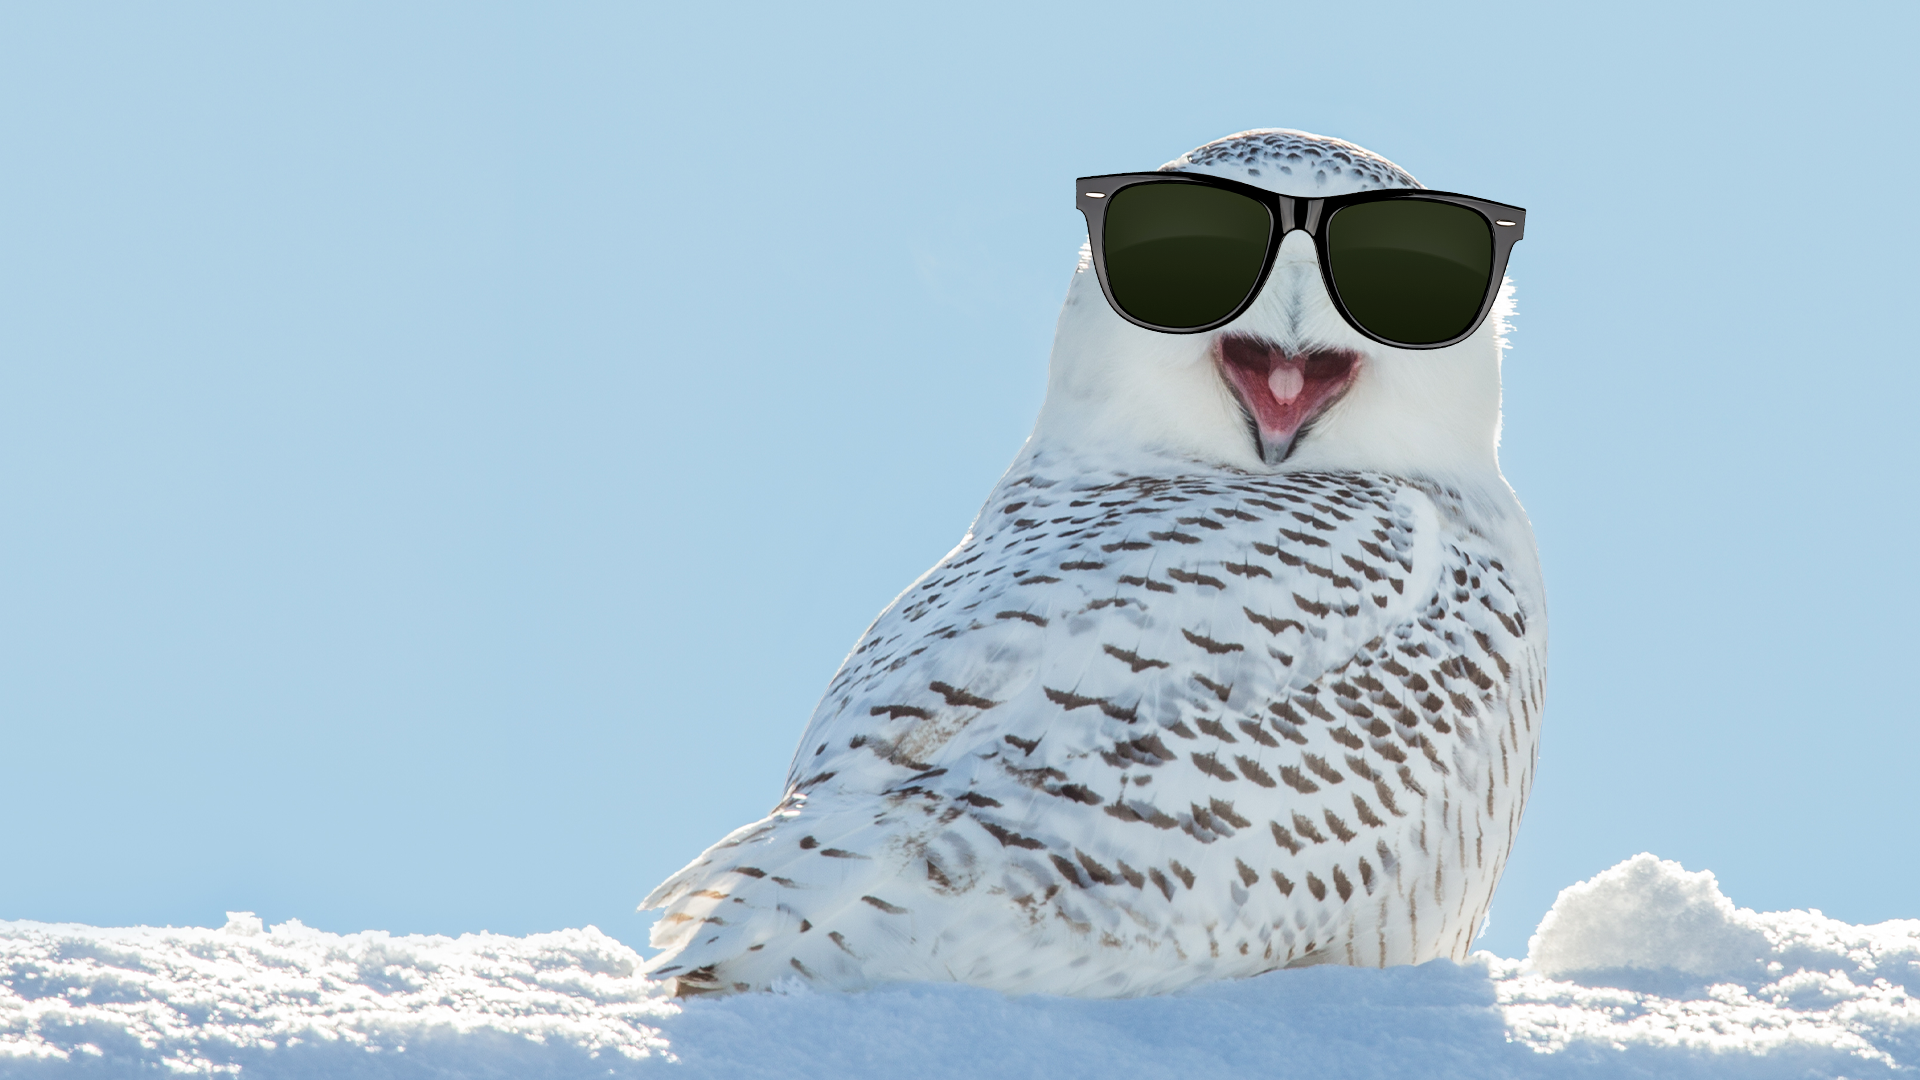 Cool looking snowy owl